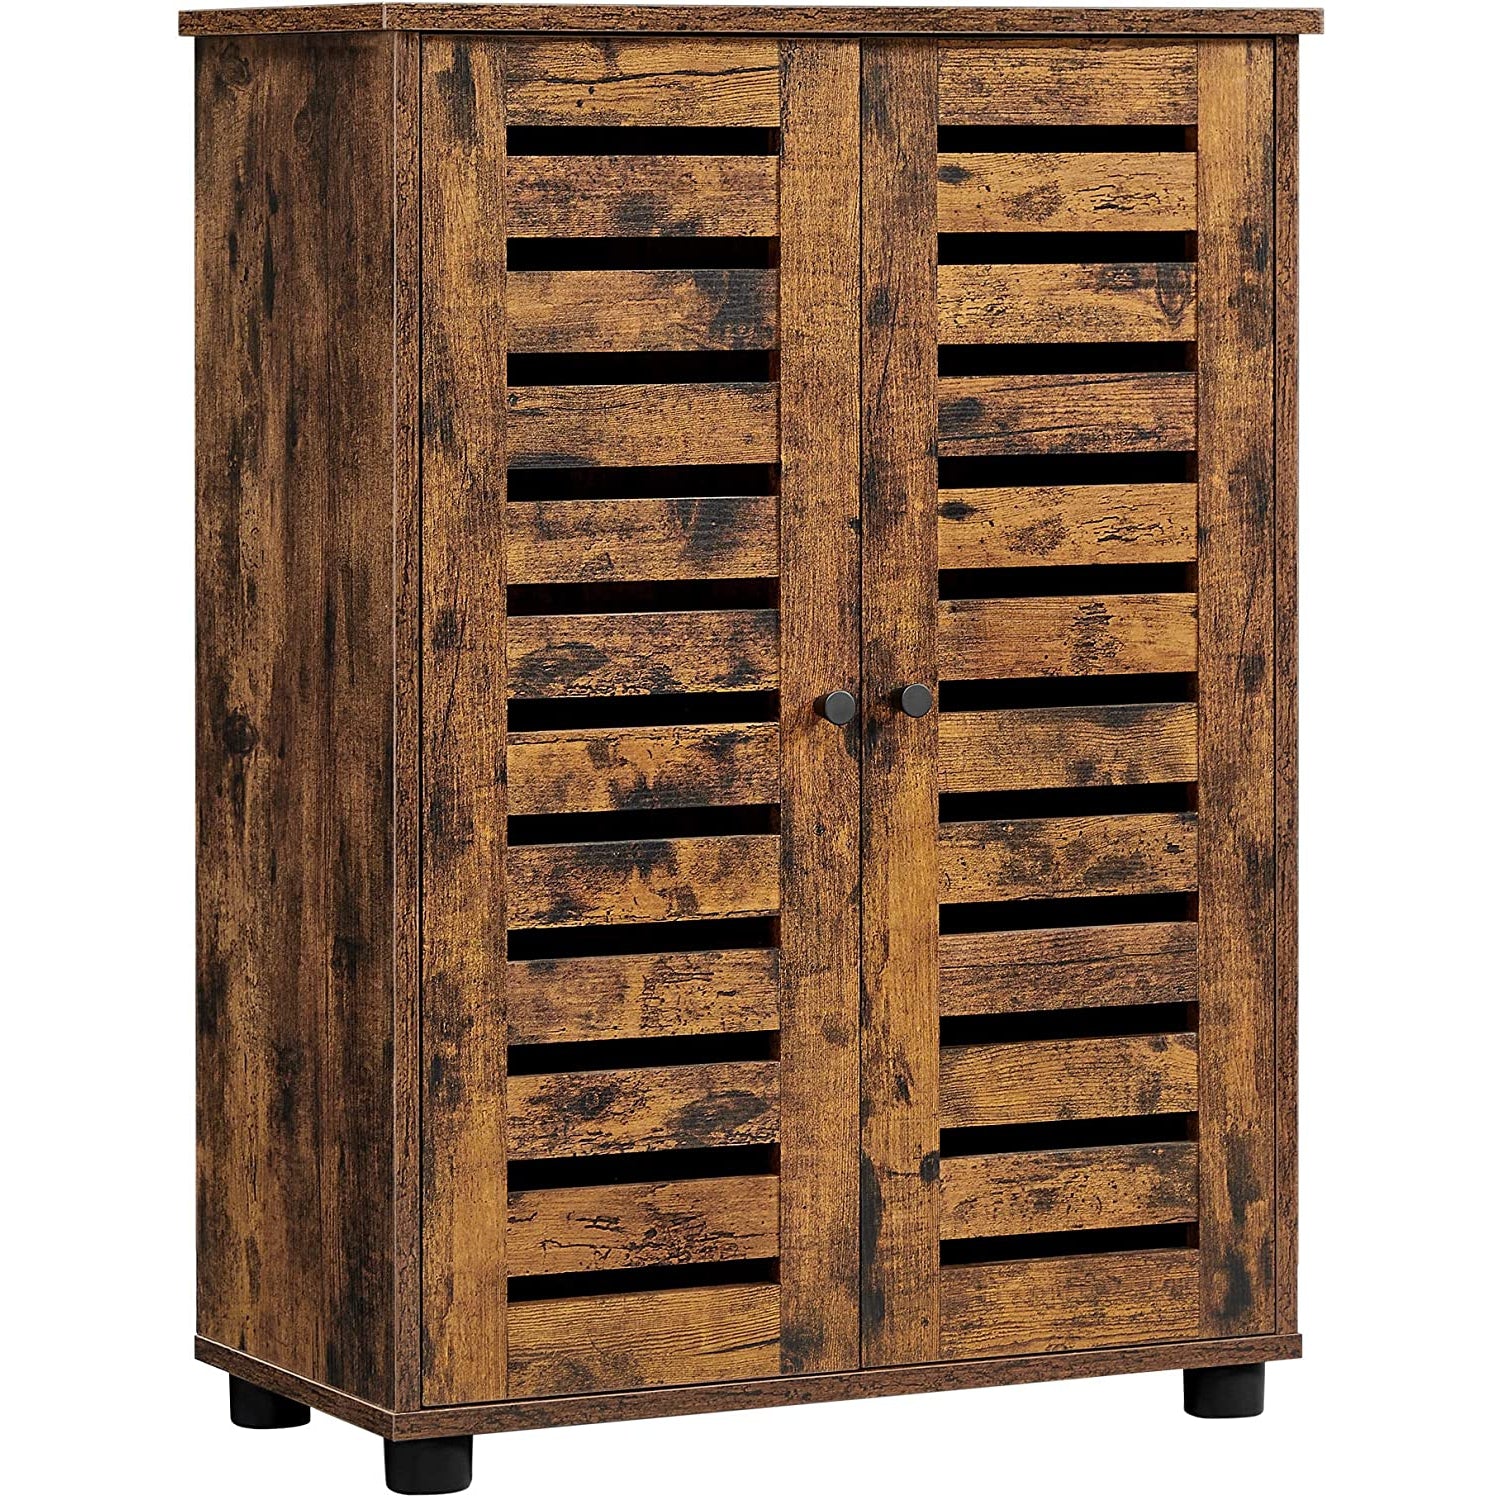 Nancy's Trotwood Dresser - Bathroom Cabinet - Storage Cabinet - Adjustable Shelves - Engineered Wood - Brown - 60 x 30 x 82 cm